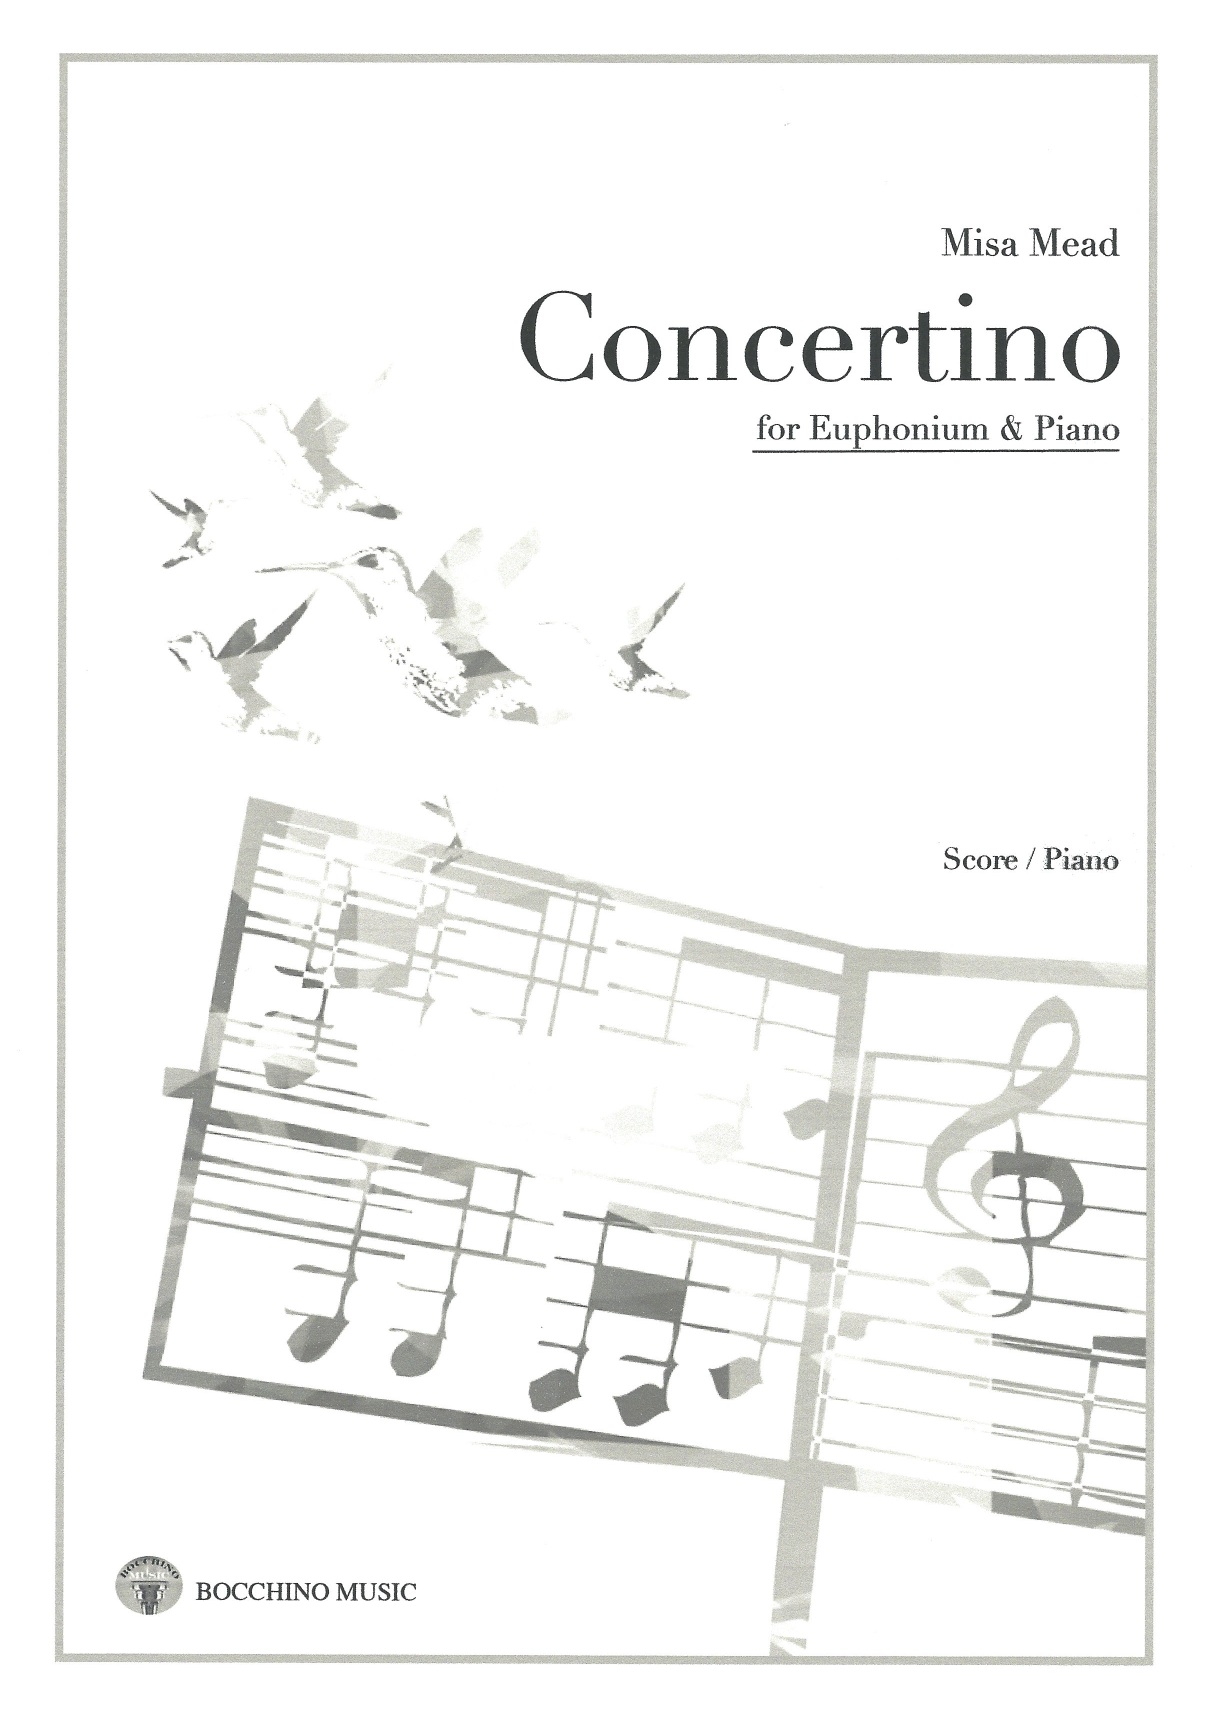 Concertino - Misa Mead - Euphonium and Piano